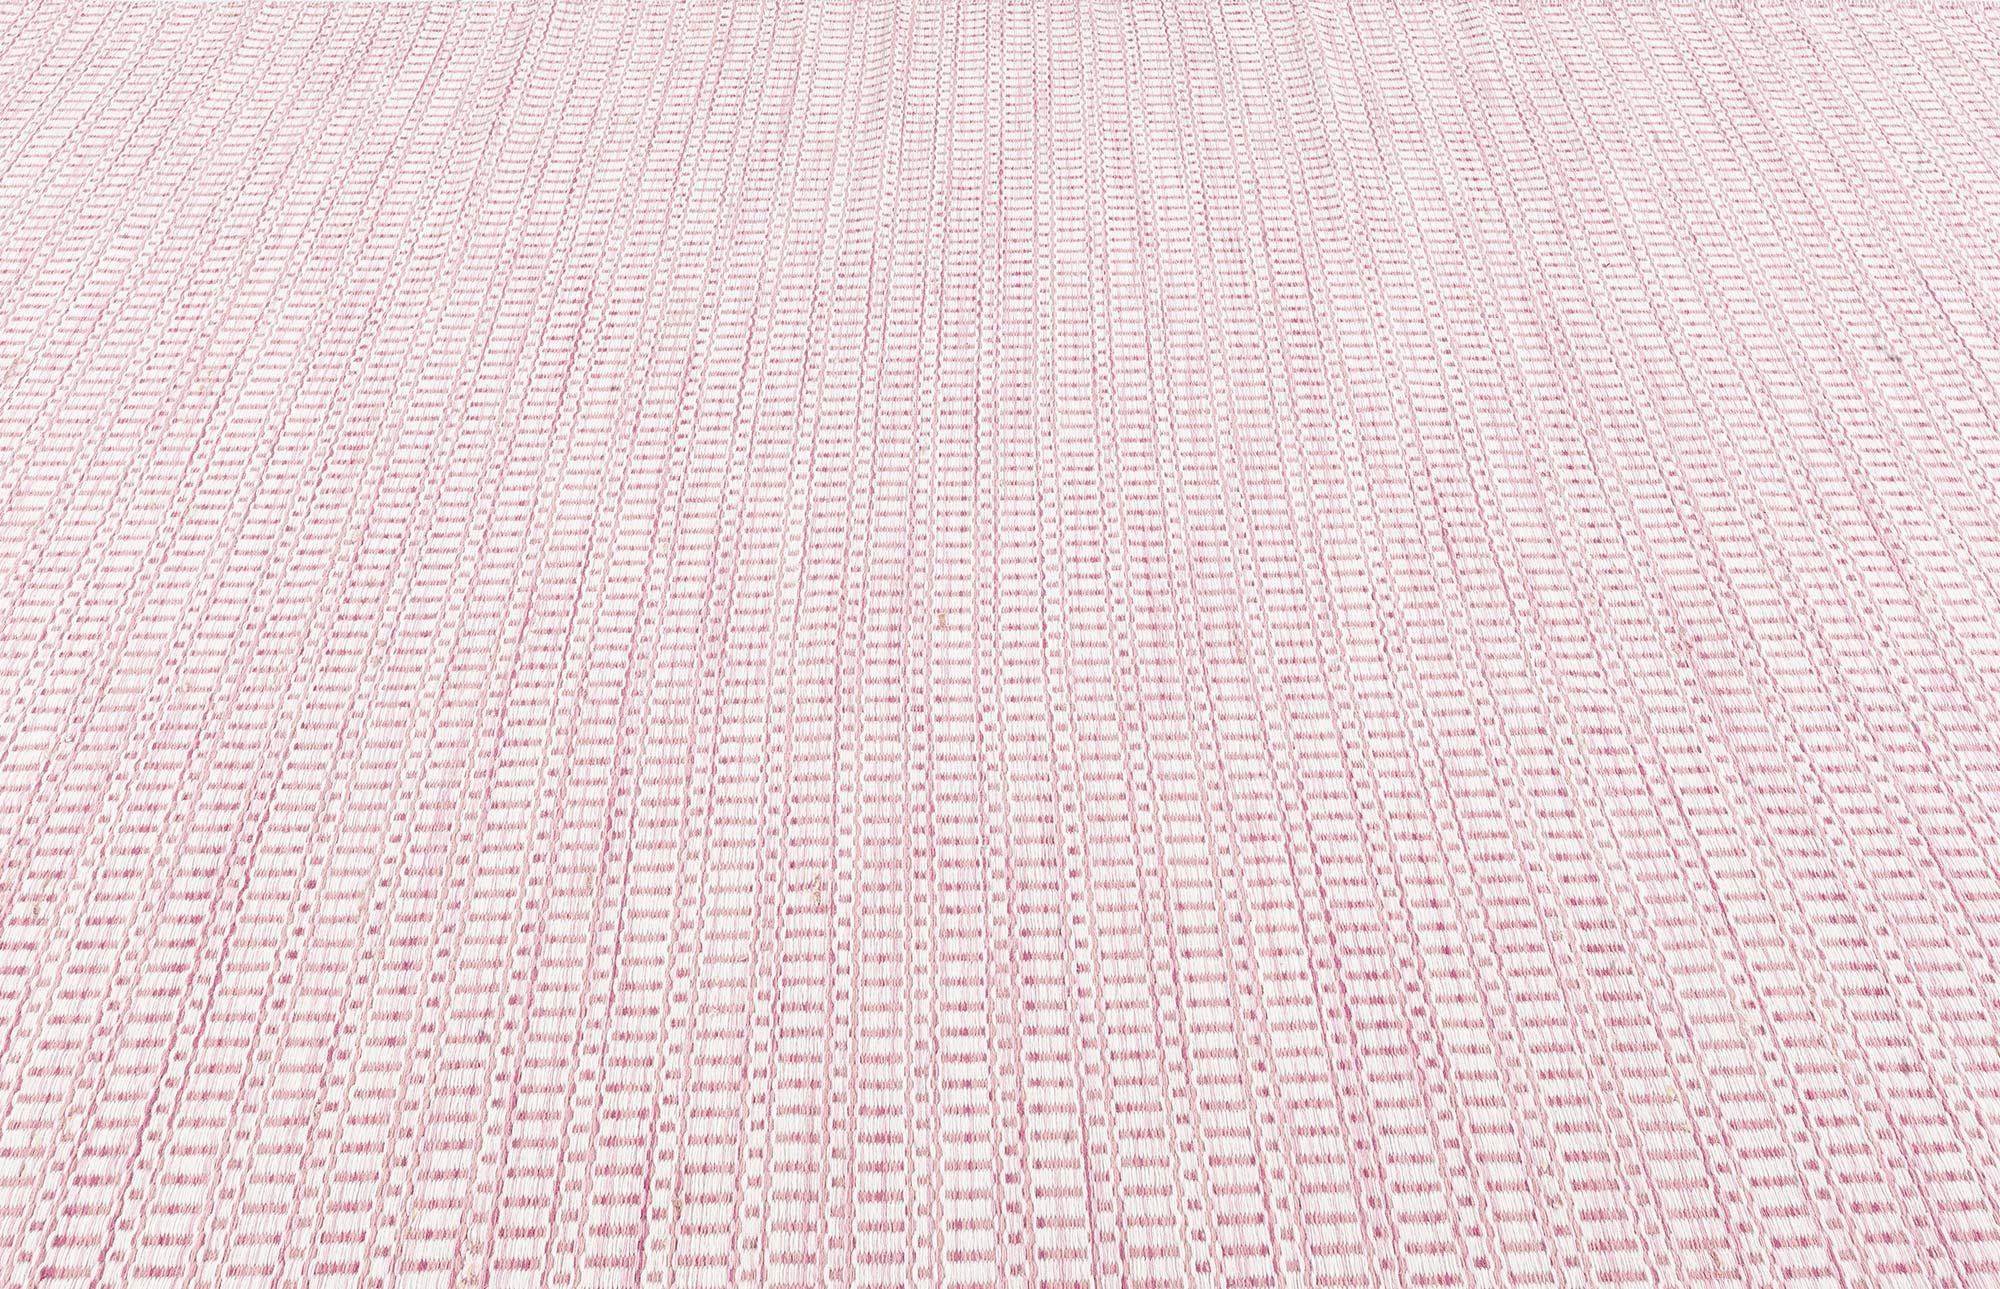 Modern Pink and Beige Flat Weave Rug by Doris Leslie Blau
Size: 9'6